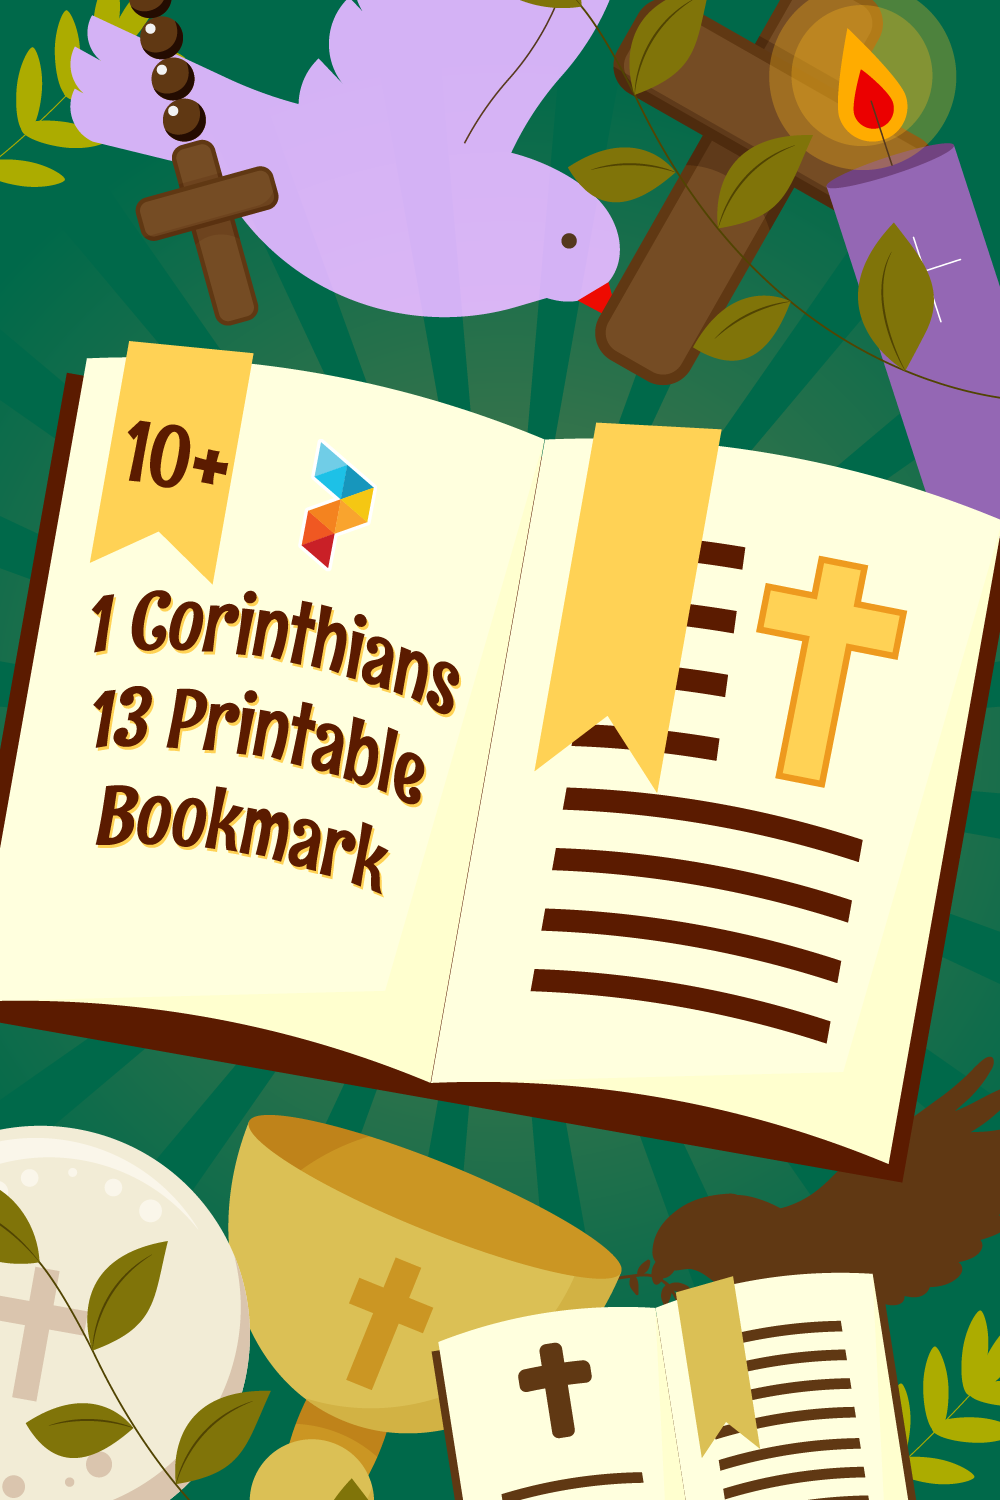 1 Corinthians 13 Printable Bookmark